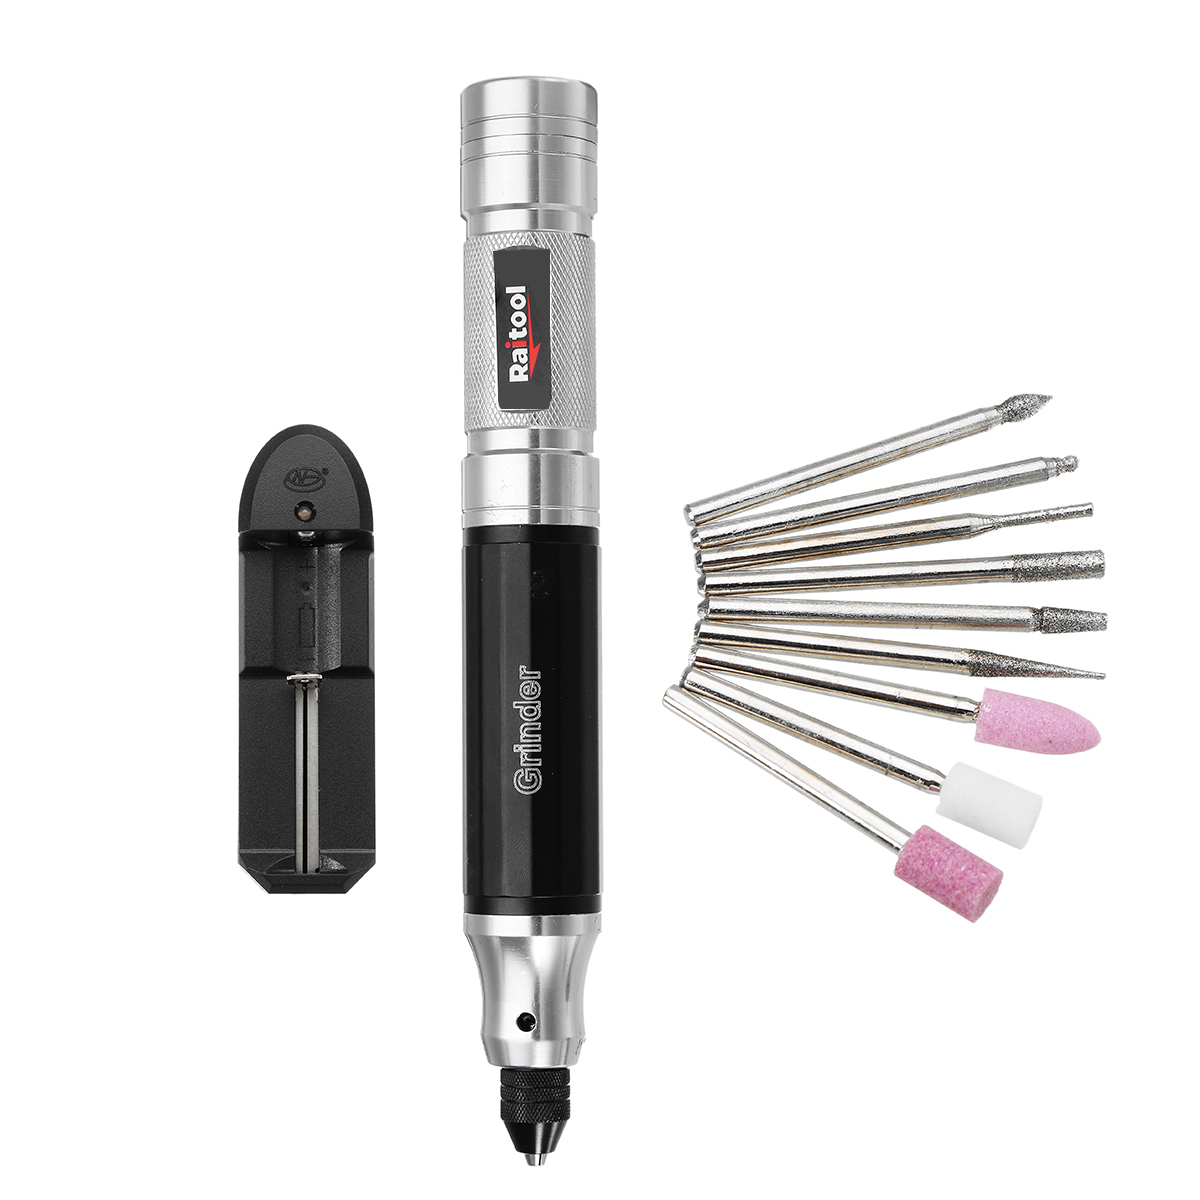 Raitool™ 3.7V 35W Mini Power Drills Electric Grinder Cordless Engraving Pen 38